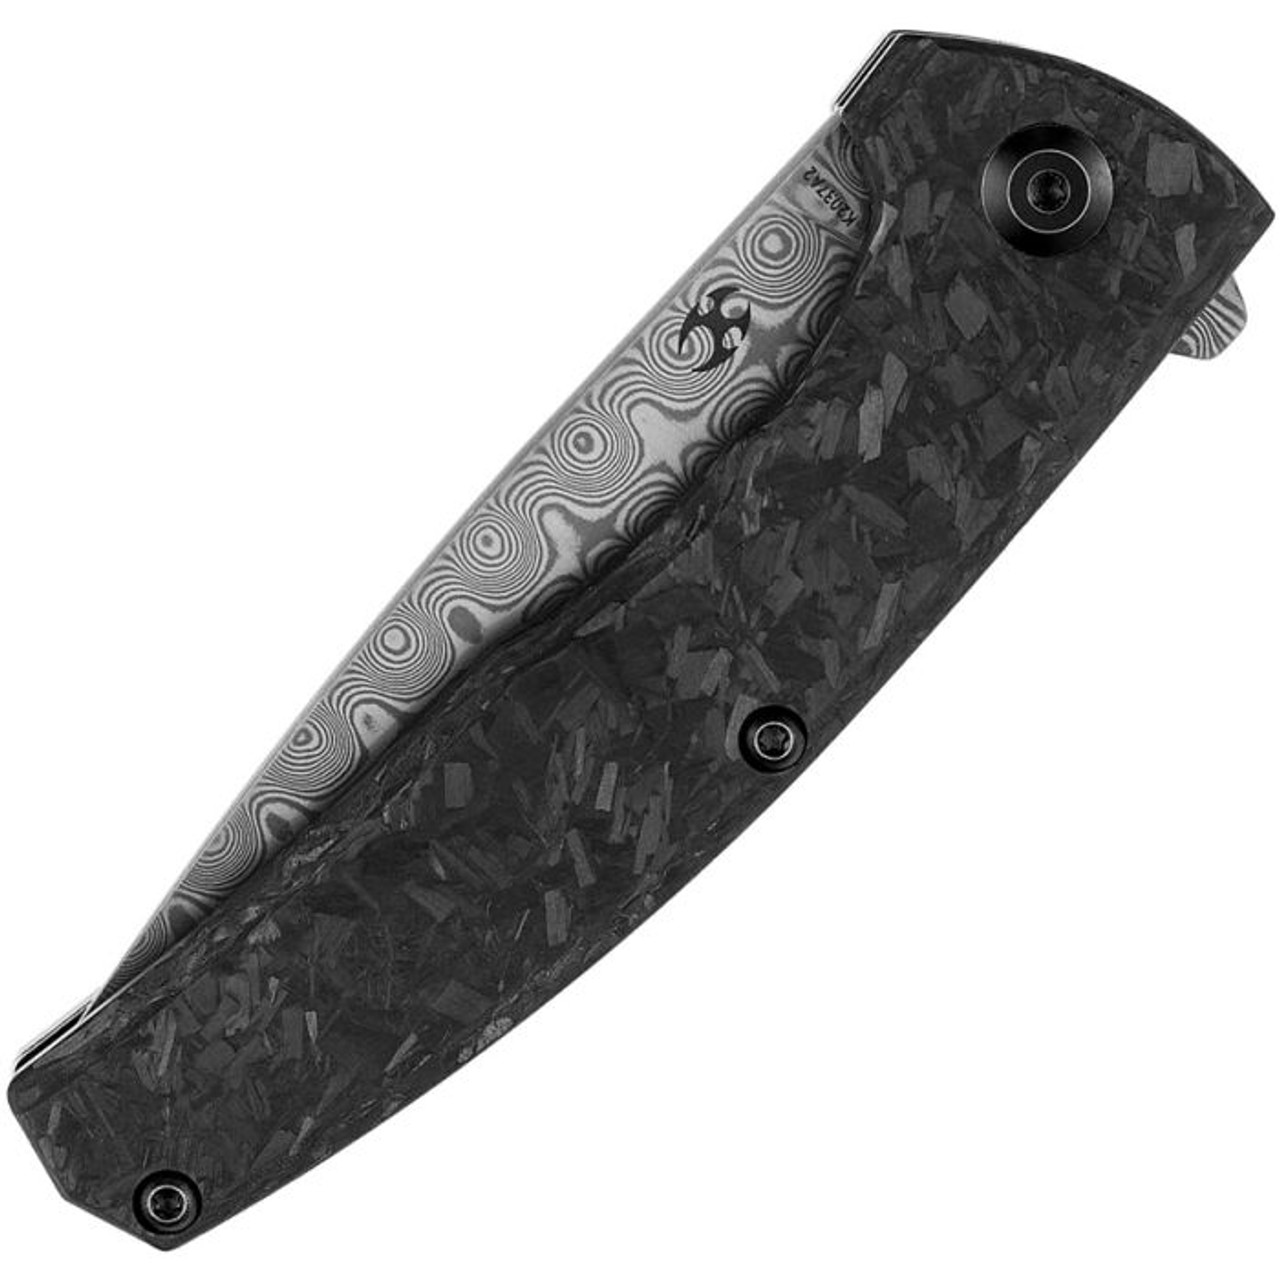 Kansept Knives AGI (K2037A2) 2.94" Damascus Drop Point Plain Blade, Black Twill Carbon Fiber Handle with Blackwashed Titanium Back Handle